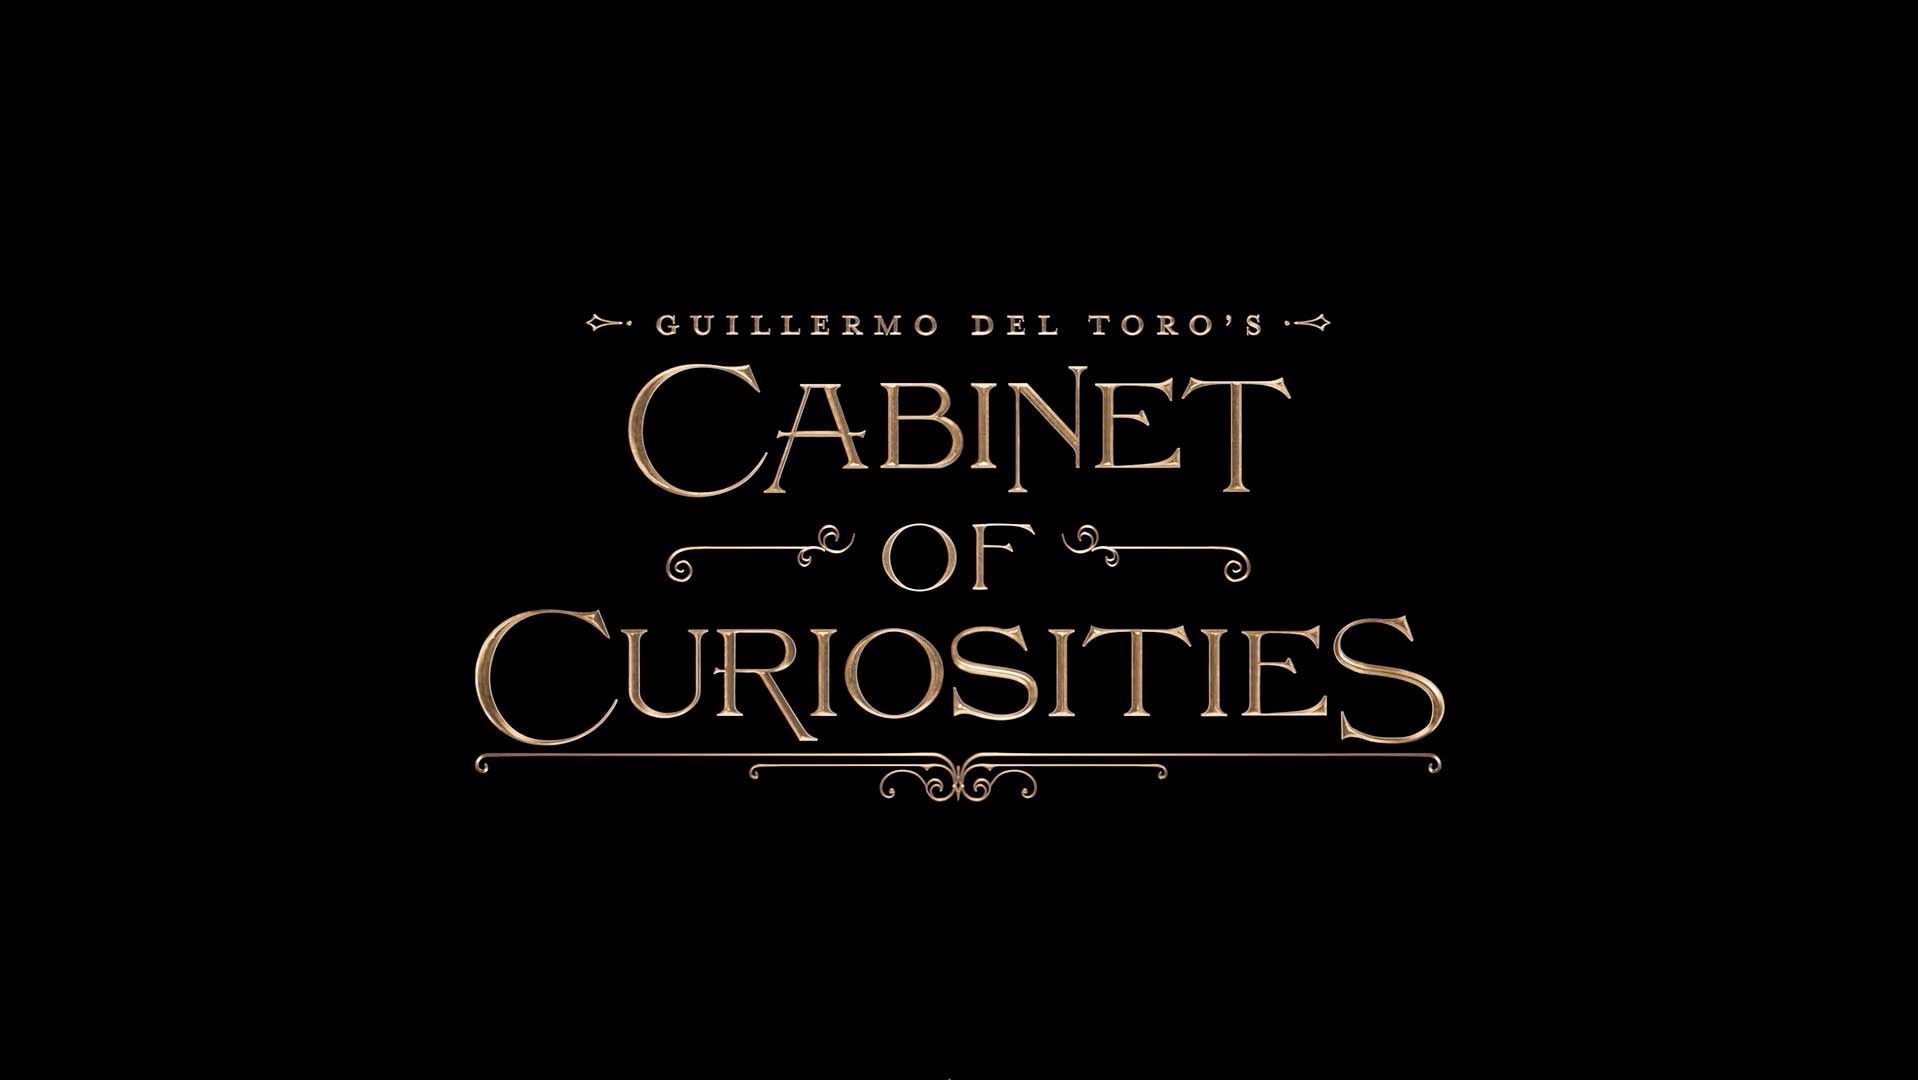 Guillermo del Toro Cabinet of Curiosities titles The Mill | STASH MAGAZINE